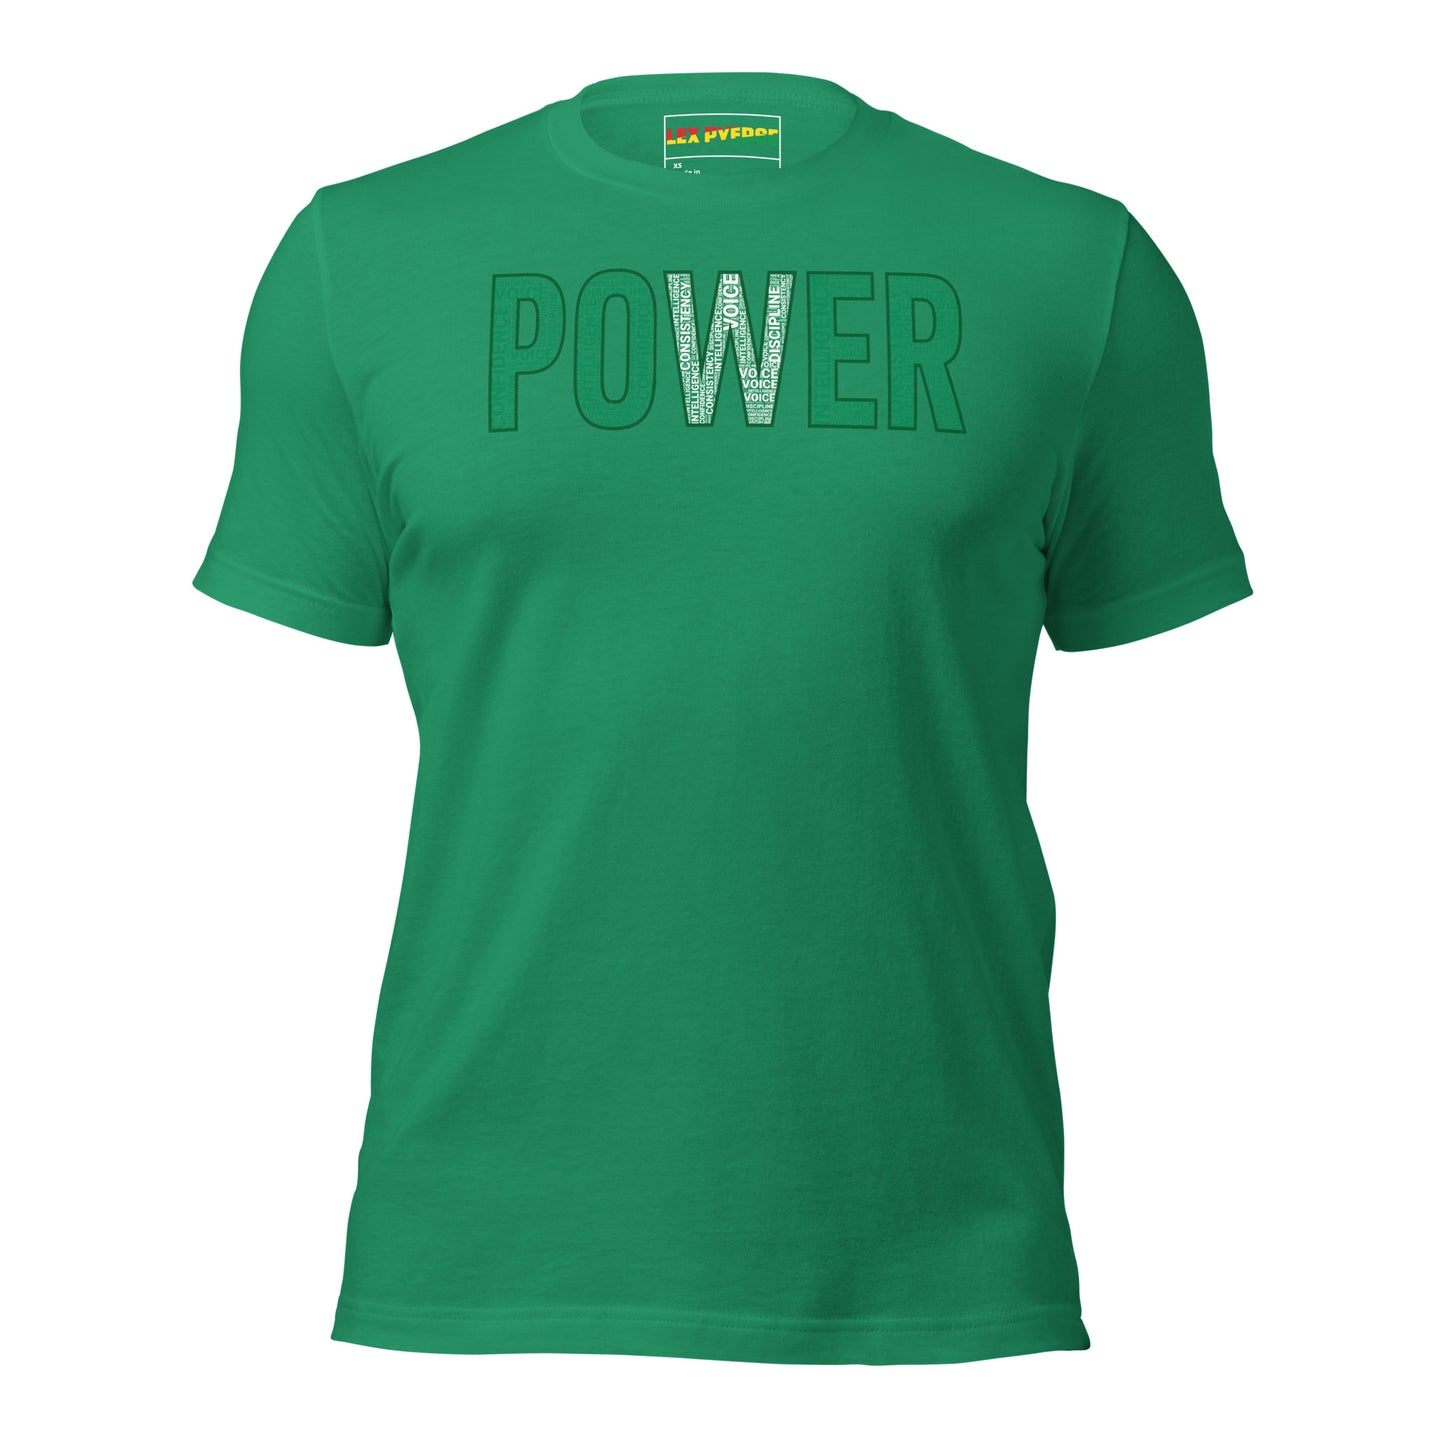 POWER Nigerian Inspired Unisex t-shirt